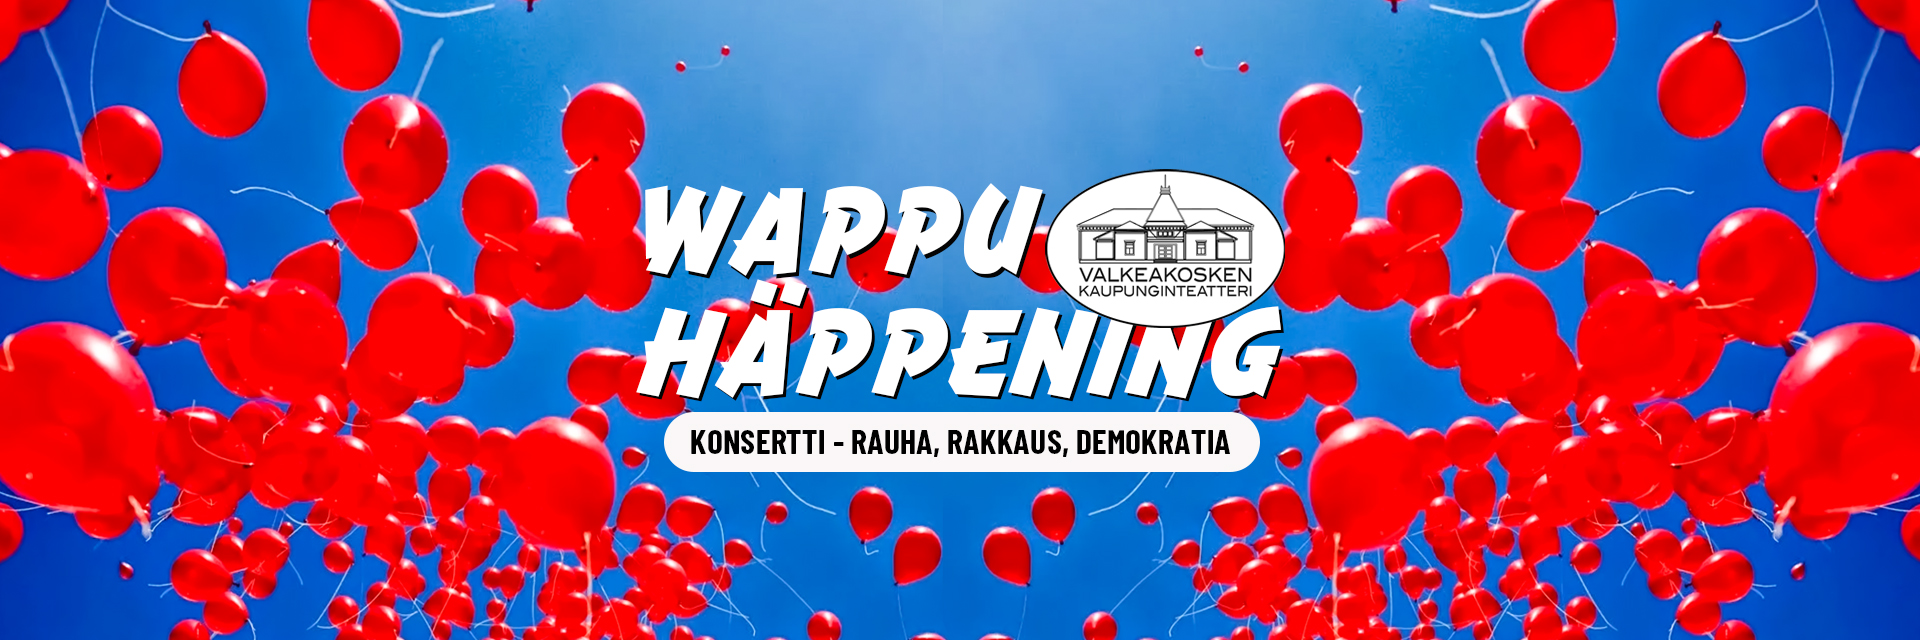 Wappu häppeningin -logo.